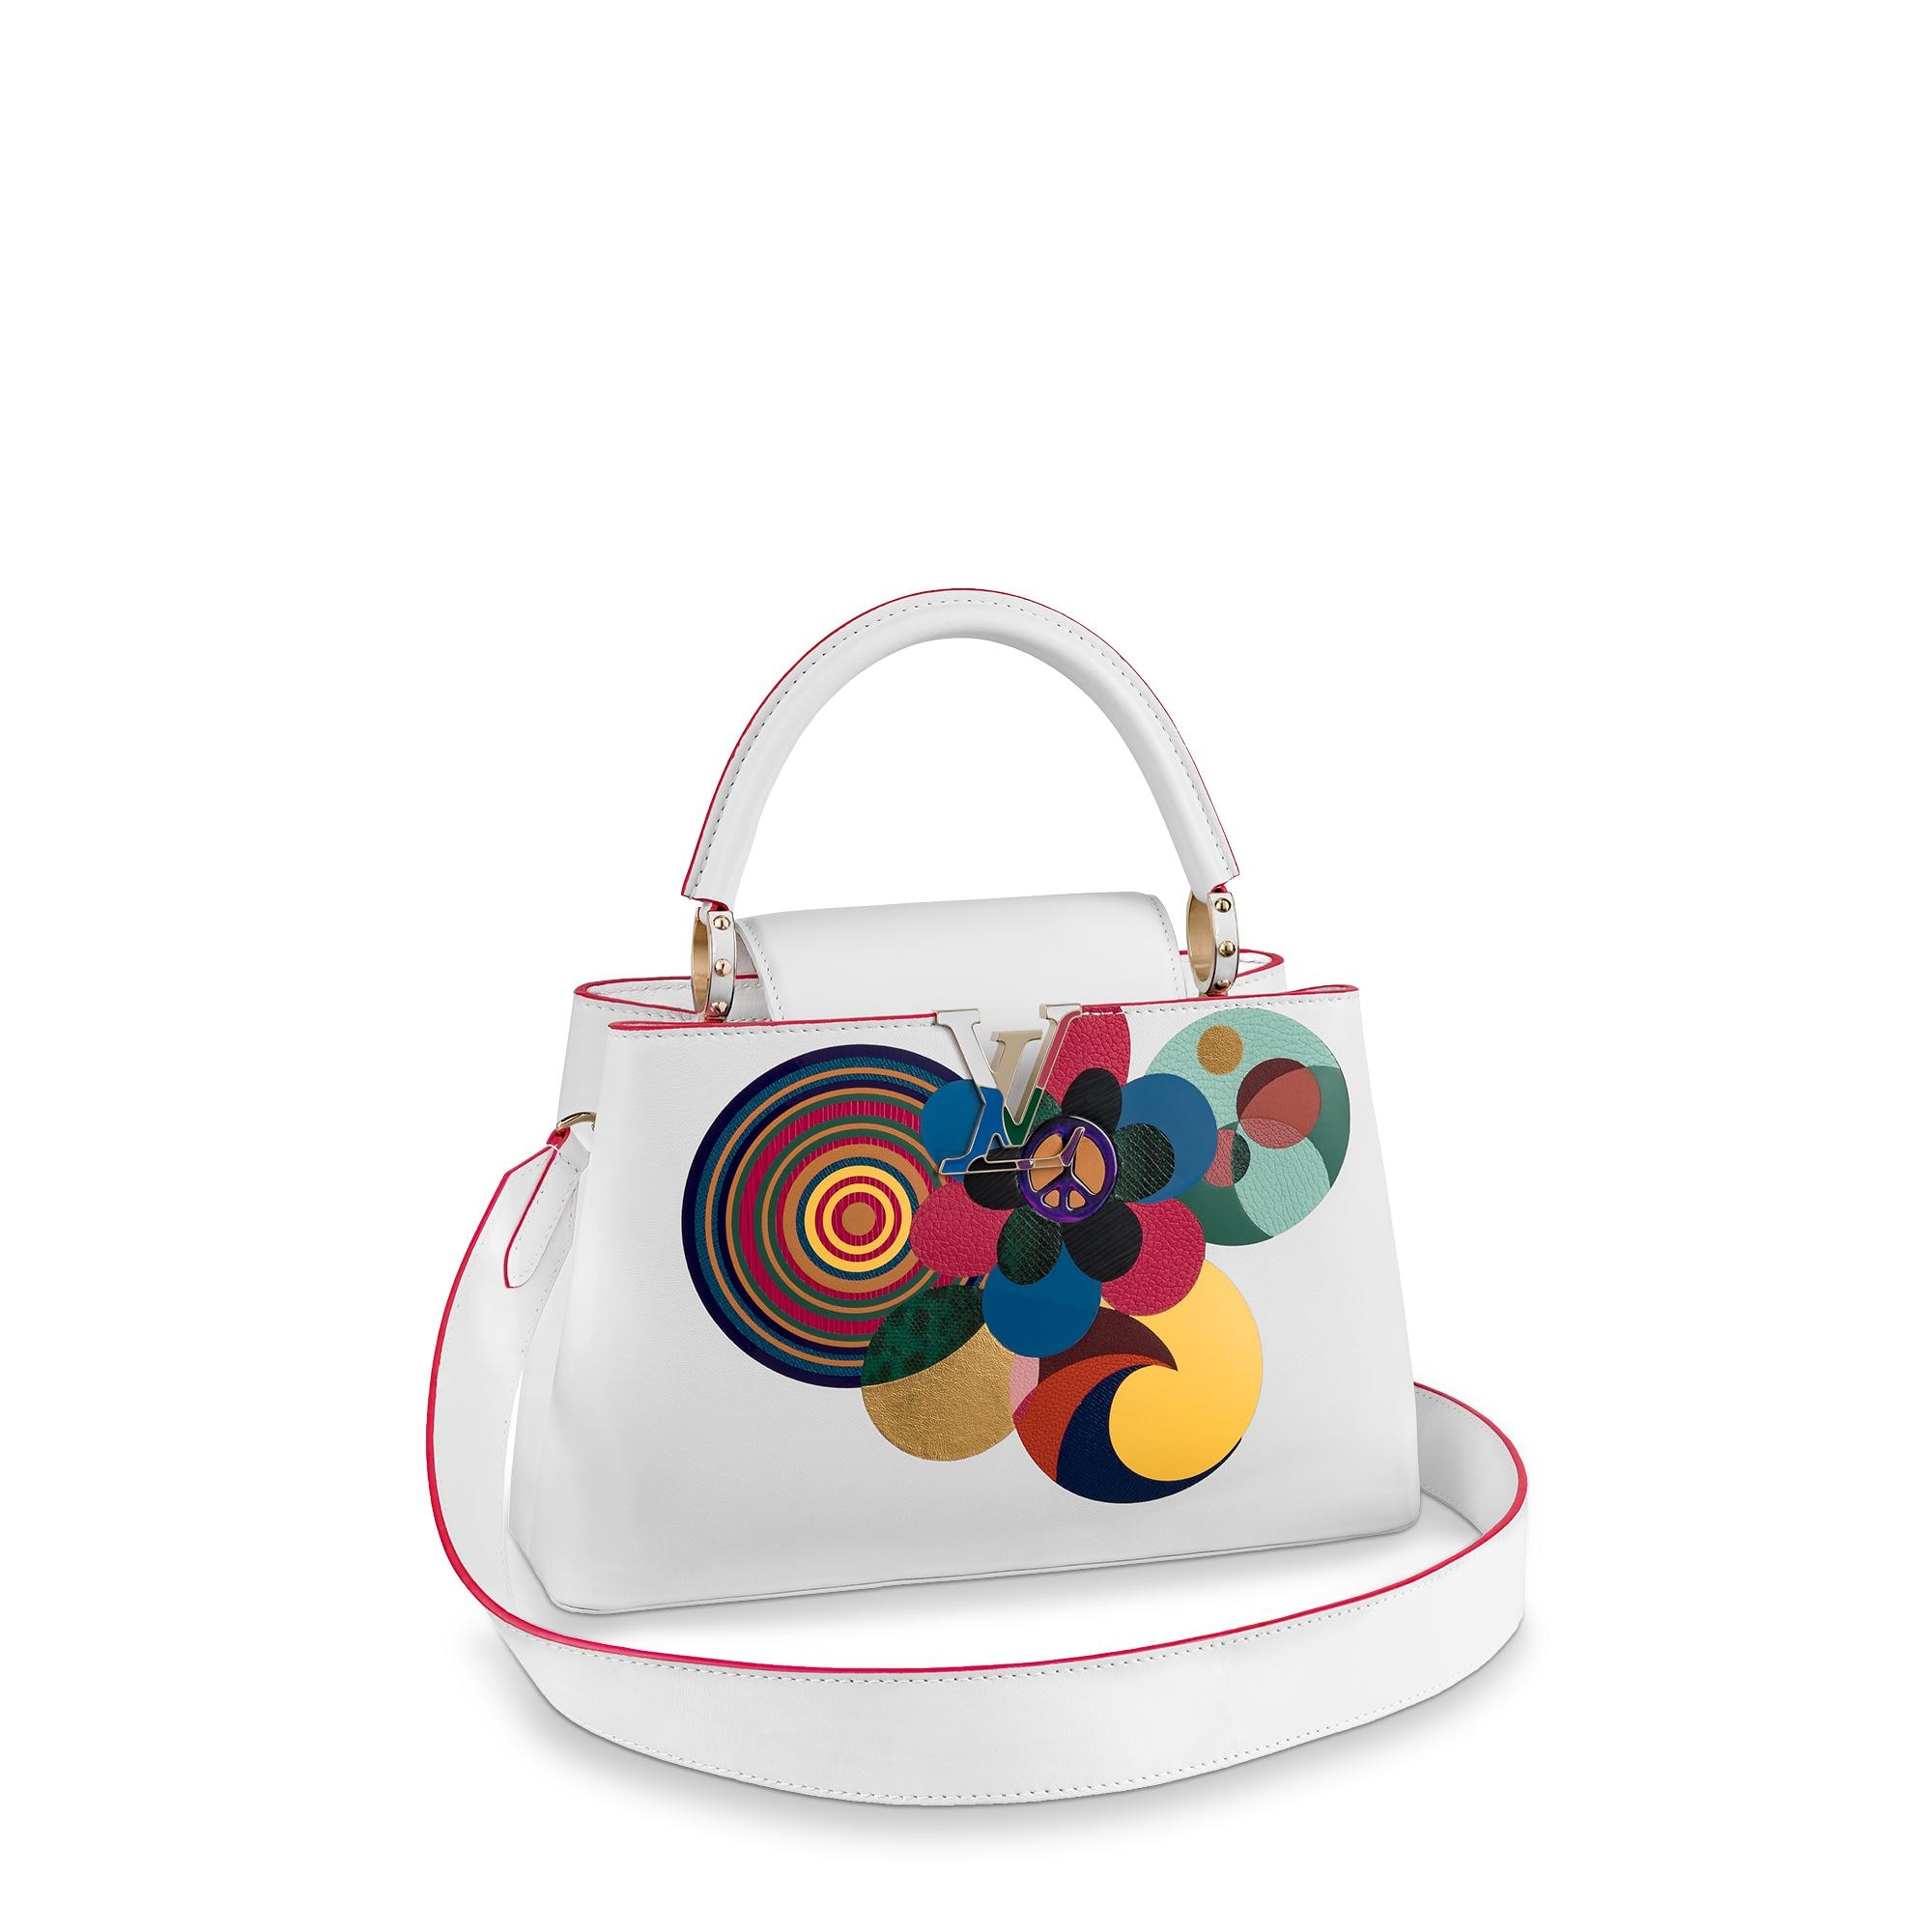 Louis Vuitton Artycapucines MM Beatriz Milhazes Capucines in Multicolor – WOMEN – Handbags M56135